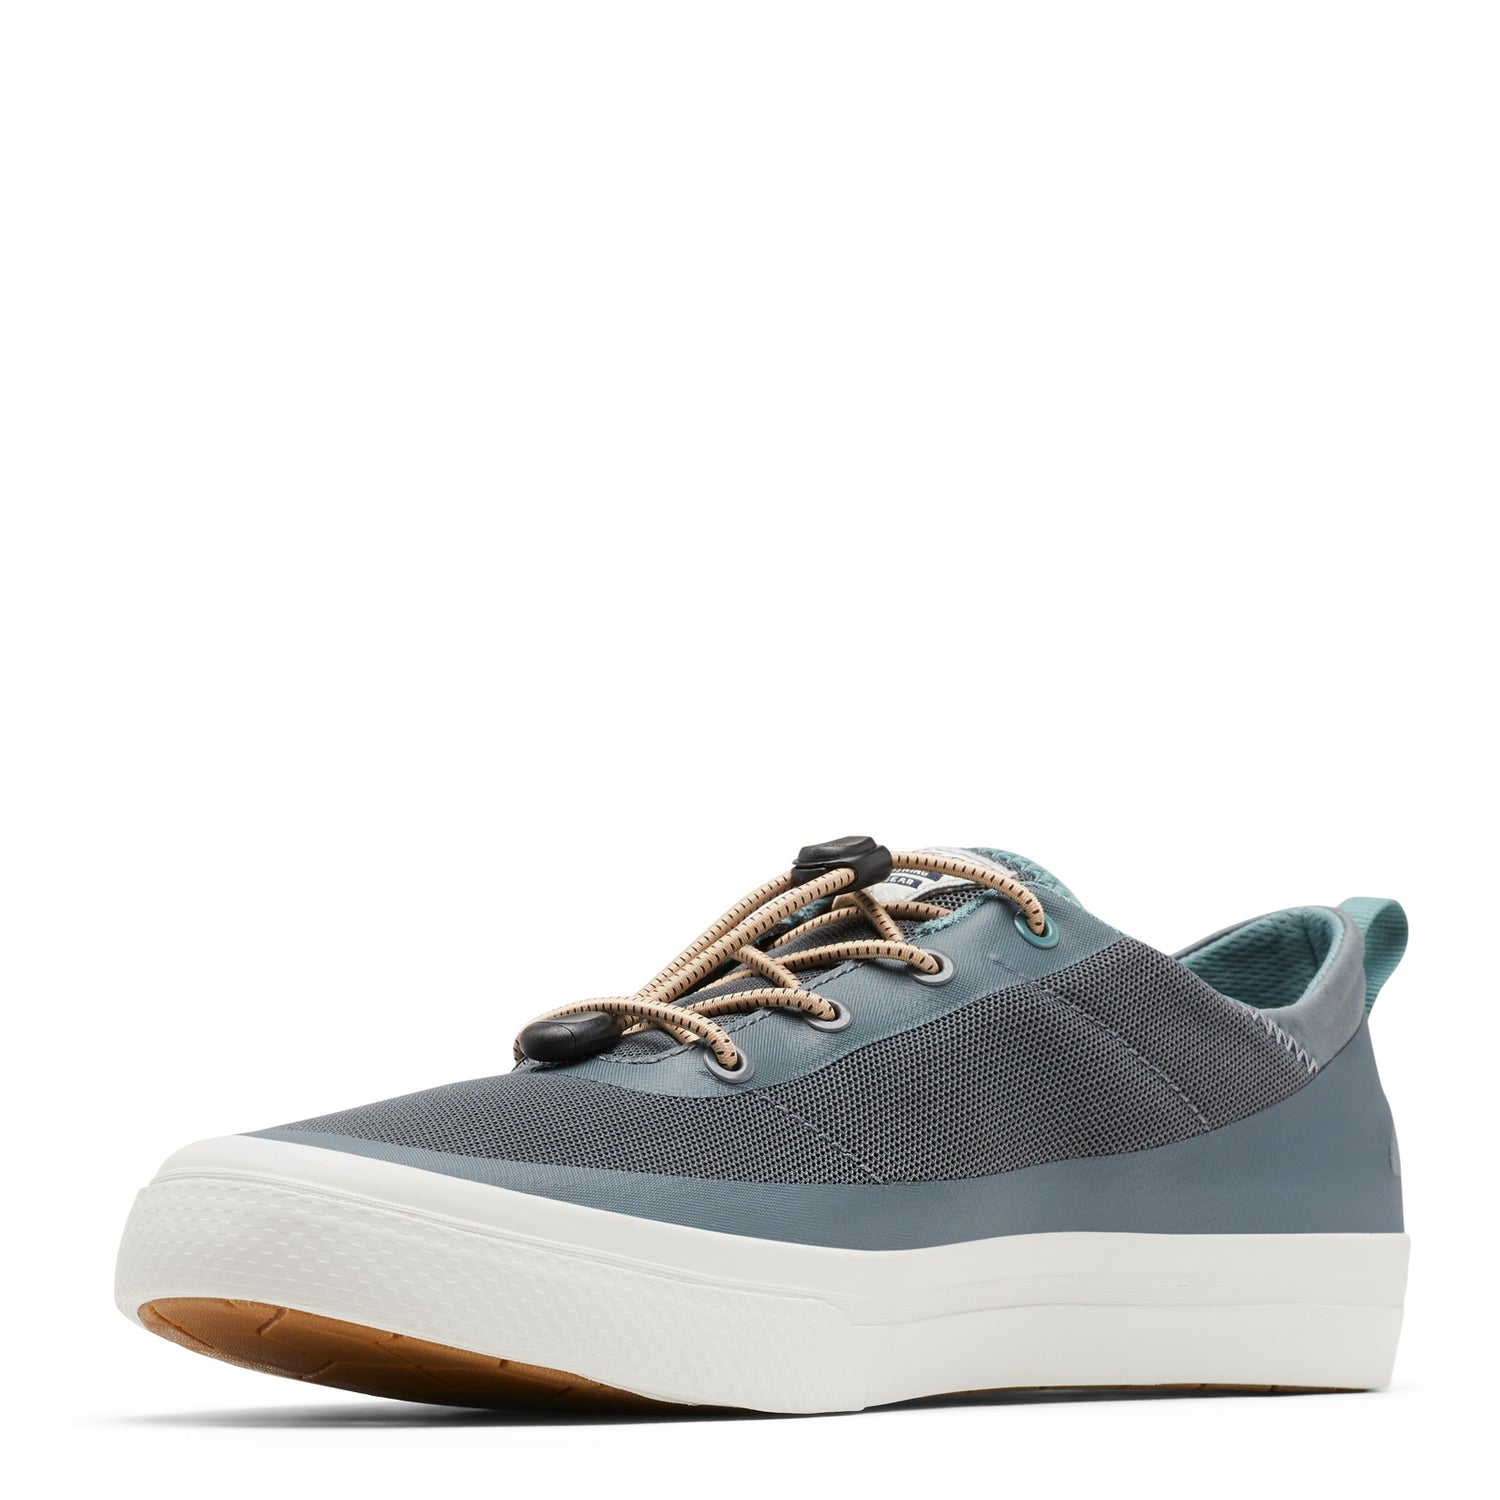 Columbia Men's PFG Bonehead Shoe - Size 10.5 - Grey